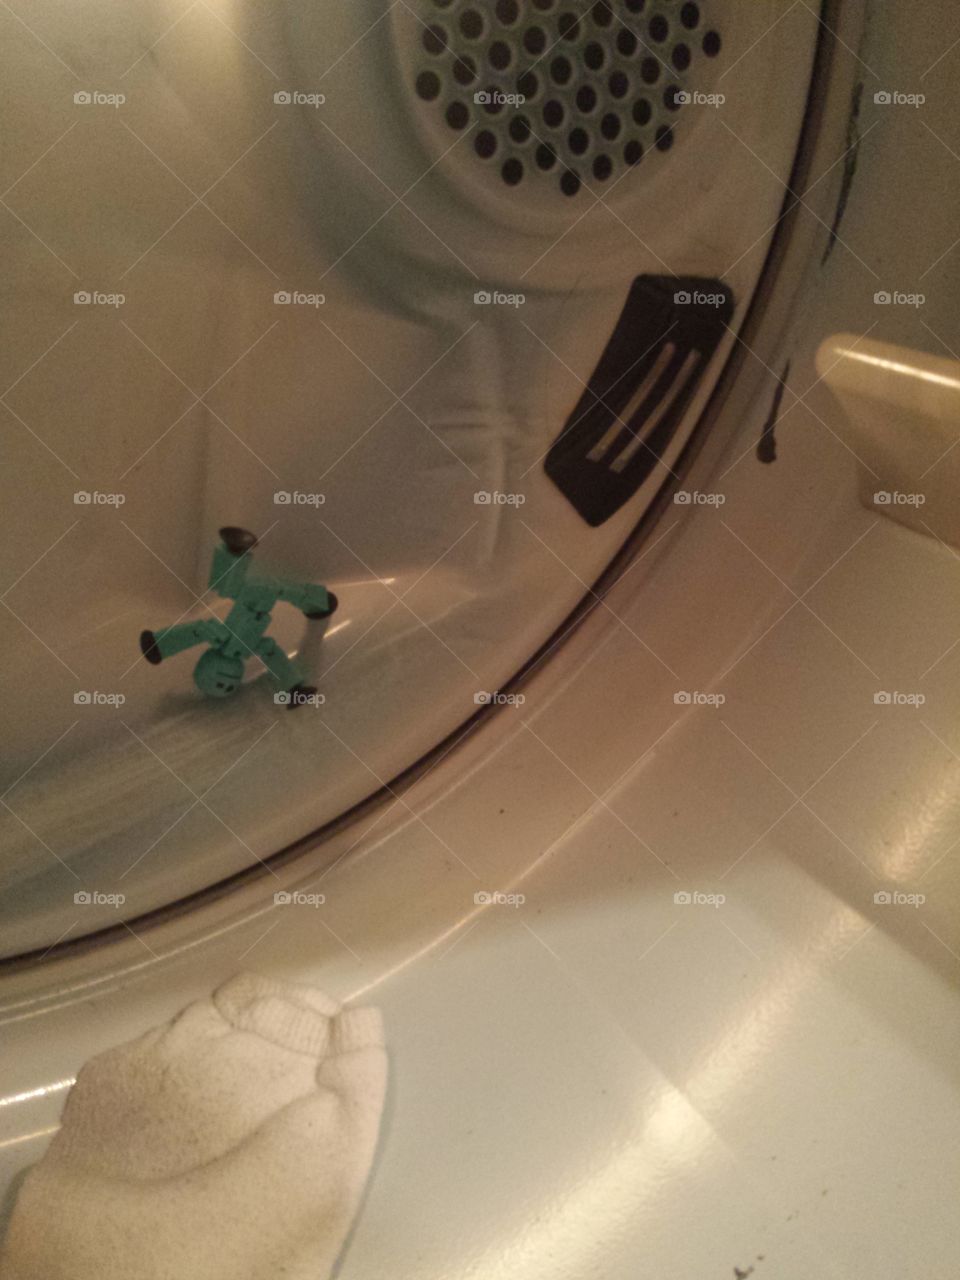 Stickbot in the dryer